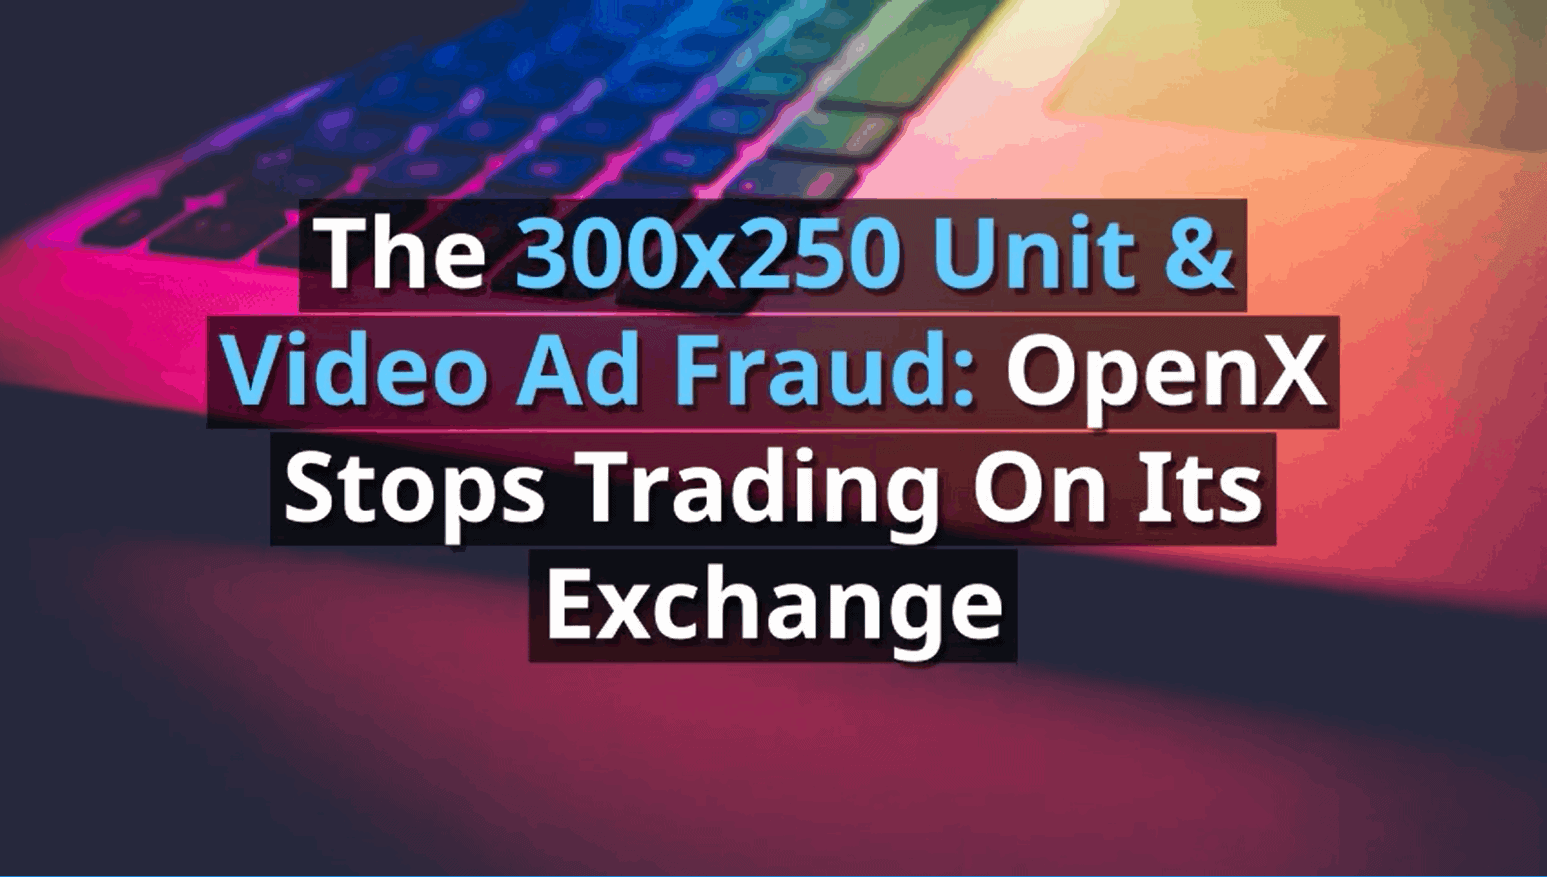 The 300x250 Unit & Video Ad Fraud